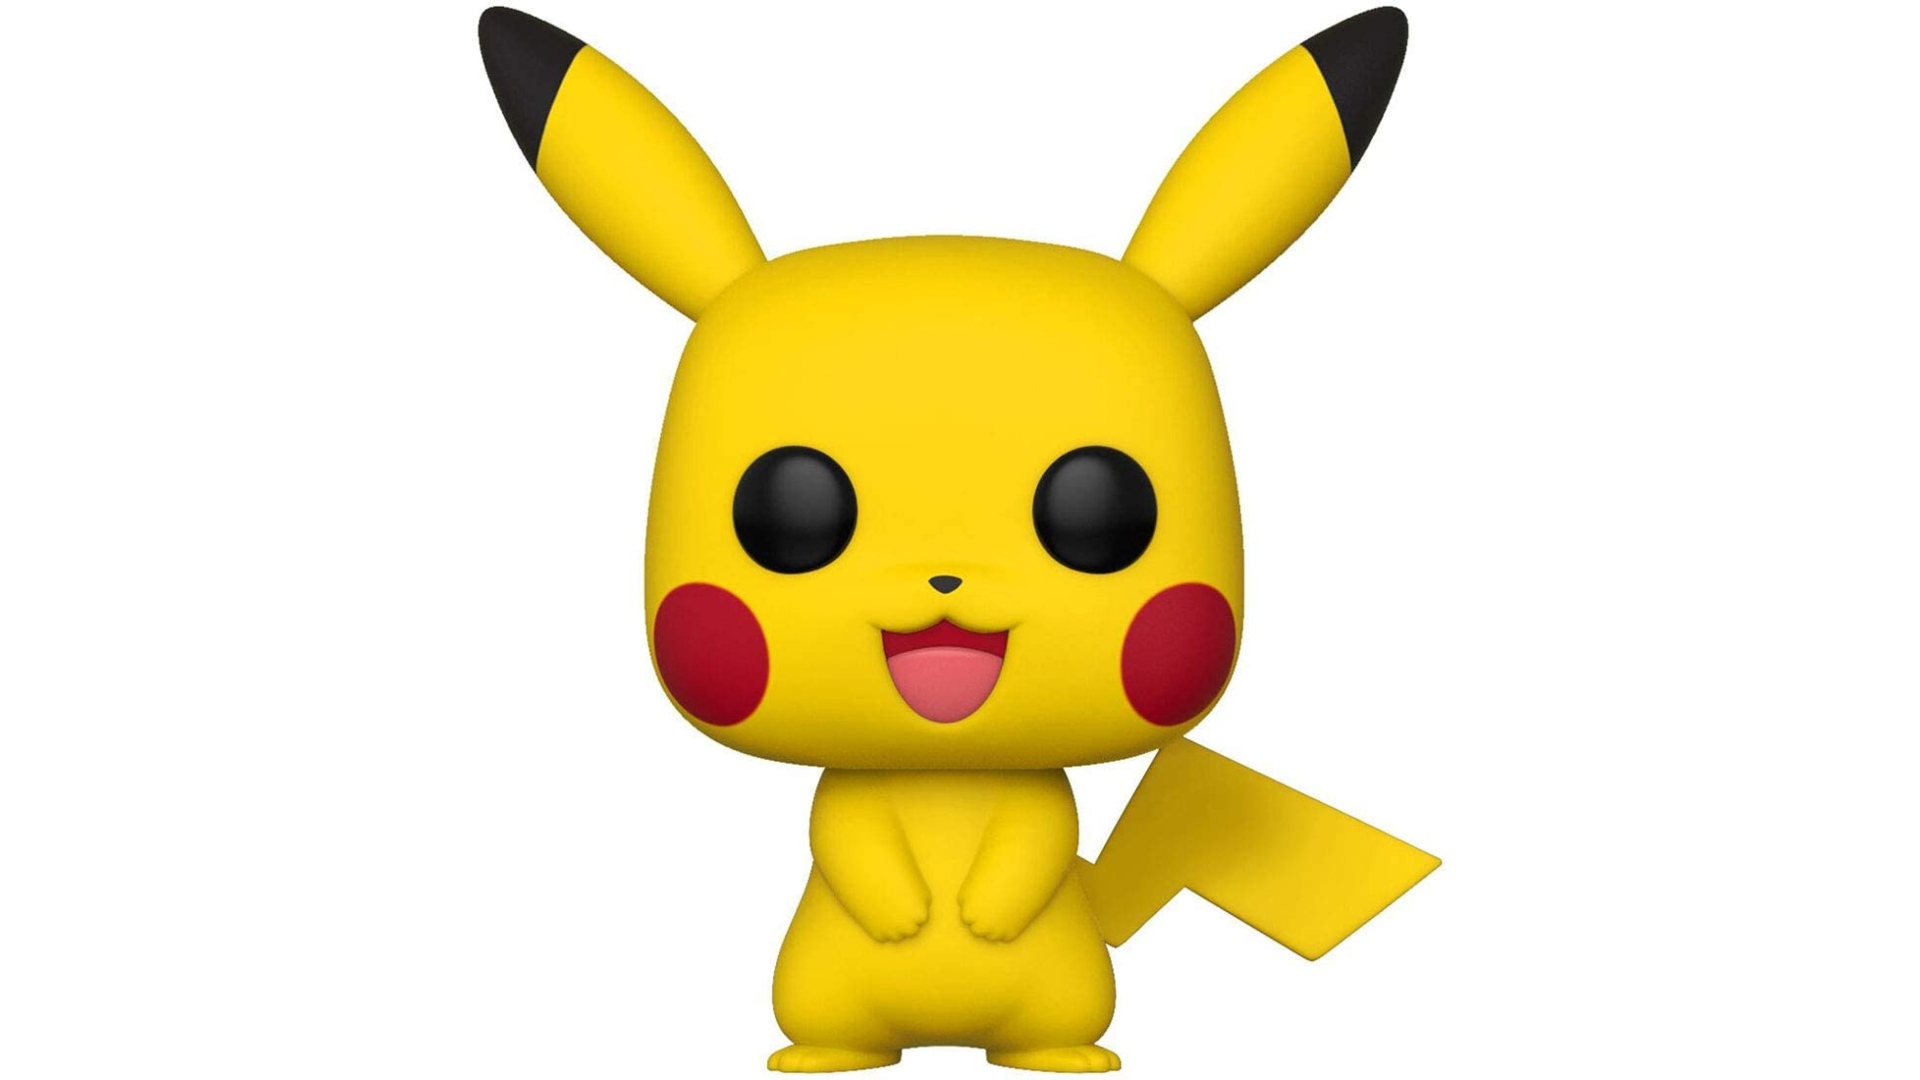 Nintendo gifts: image shows a Pikachu Funko Pop figure.